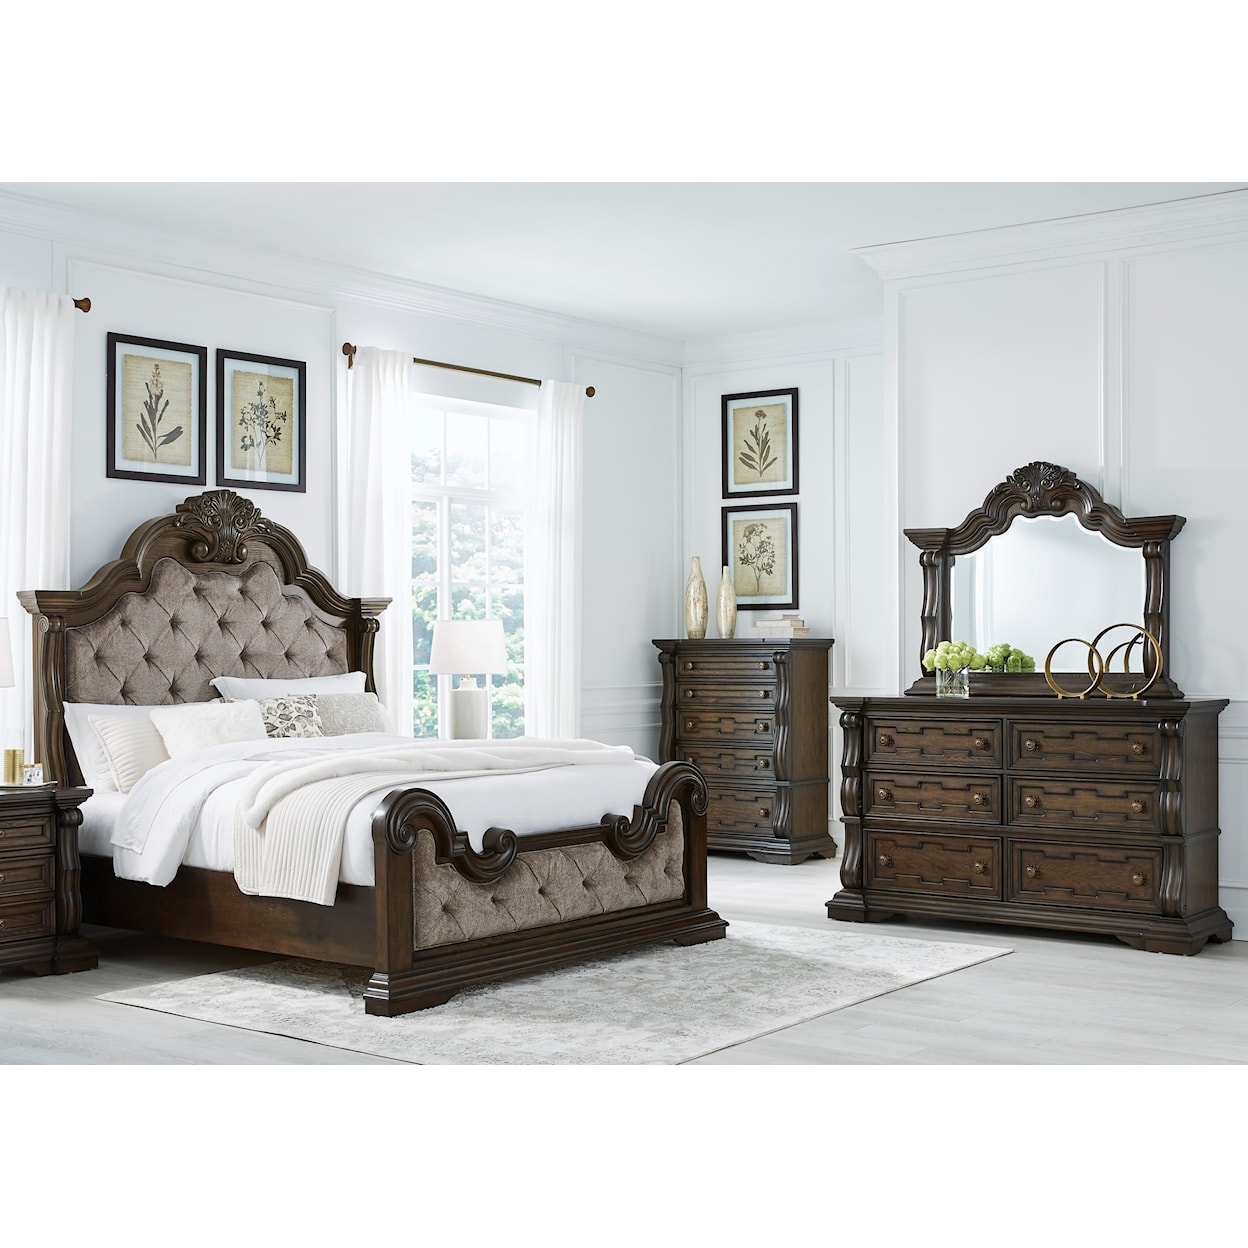 Ashley Furniture Signature Design Maylee King Bedroom Set